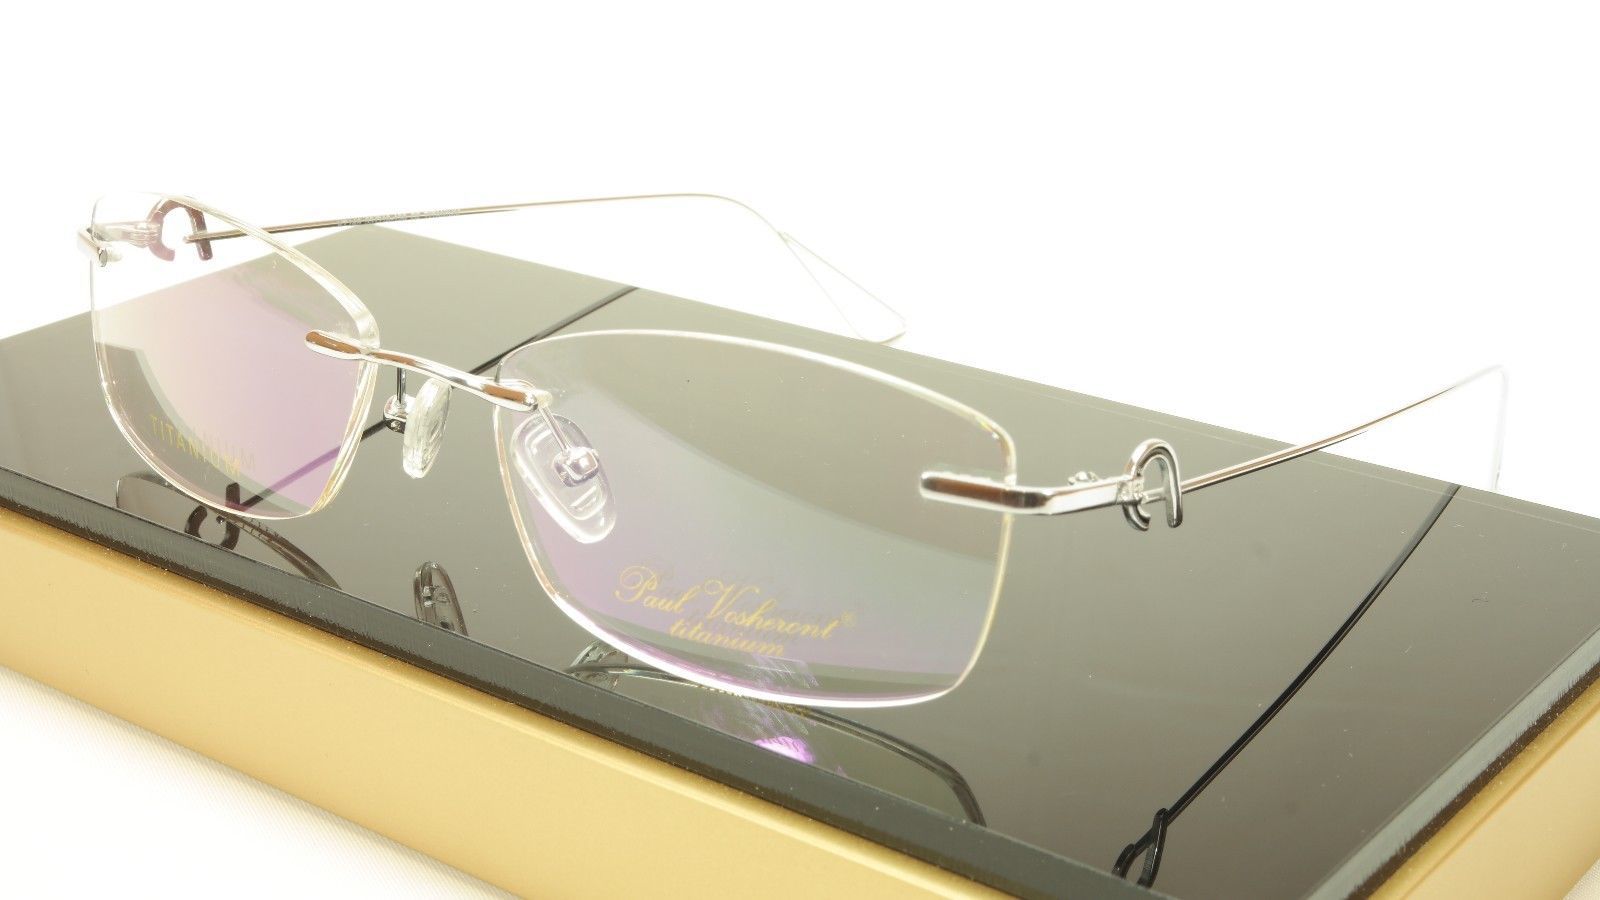 Authentic Paul Vosheront VT146 C2 Titanium Silver Rimless Eyeglasses Frame Italy - $220.00